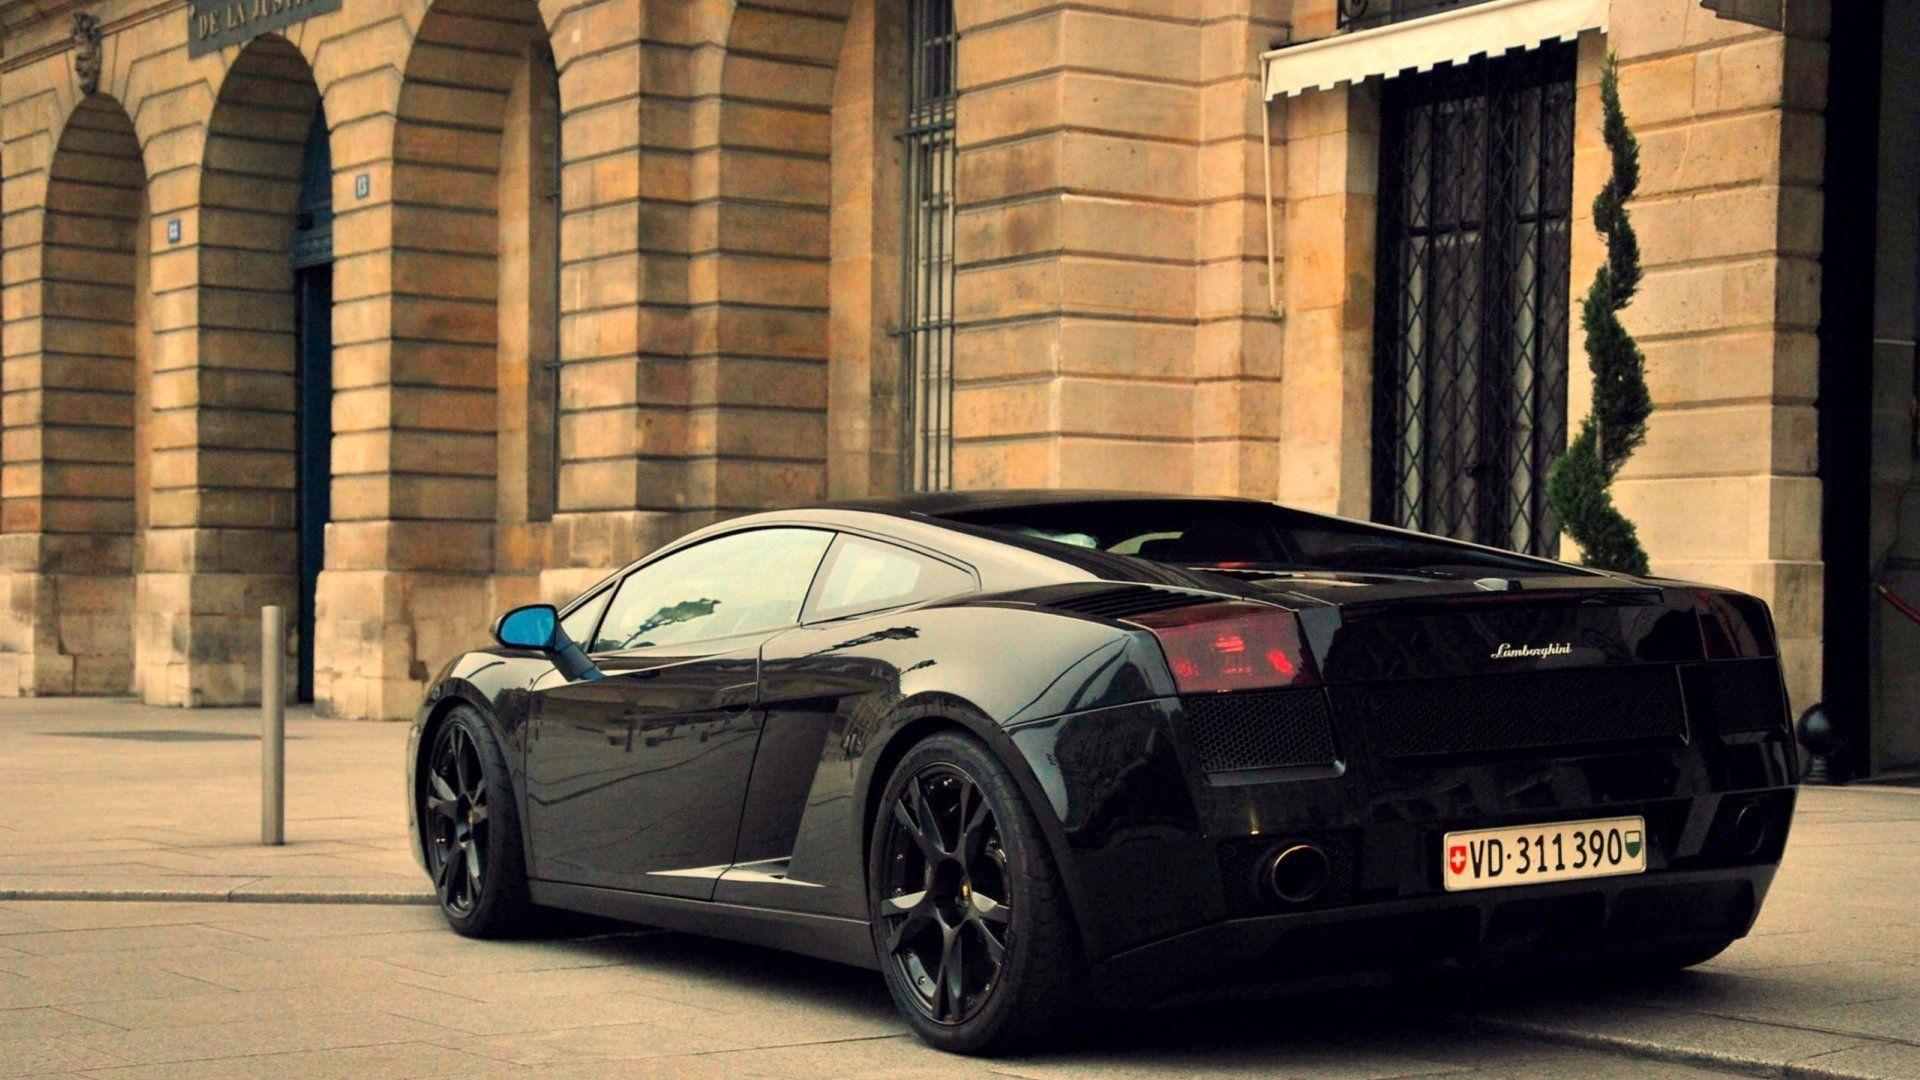 Lamborghini Gallardo Black. High Definition Wallpaper, High